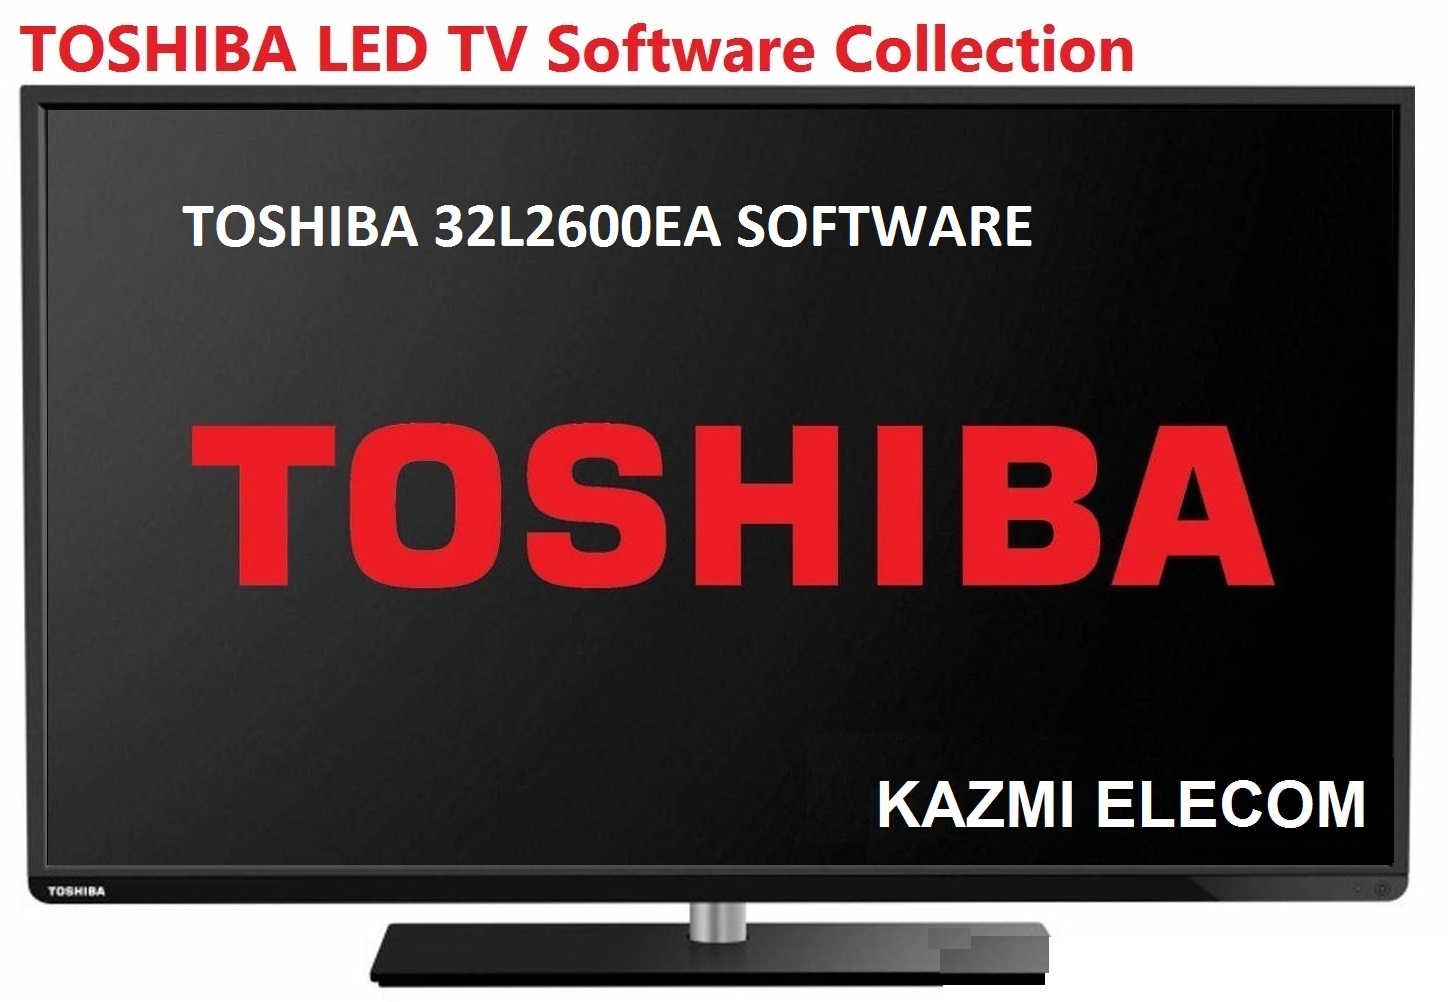 Toshiba 32L2600Ea